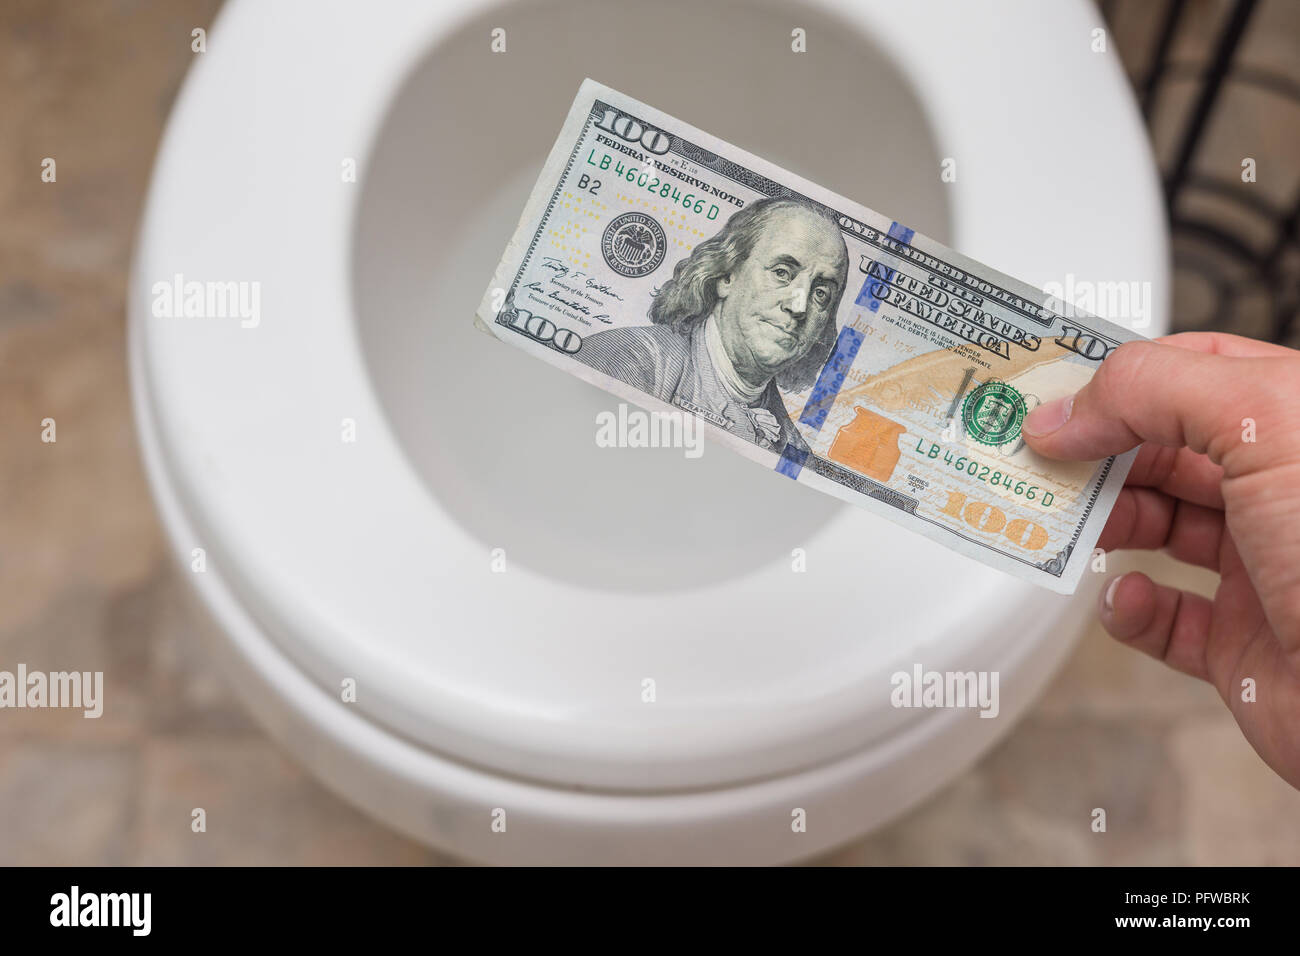 Holding crisp one hundred dollar bill en toilettes ; clena et lumineux ; finances concept Banque D'Images